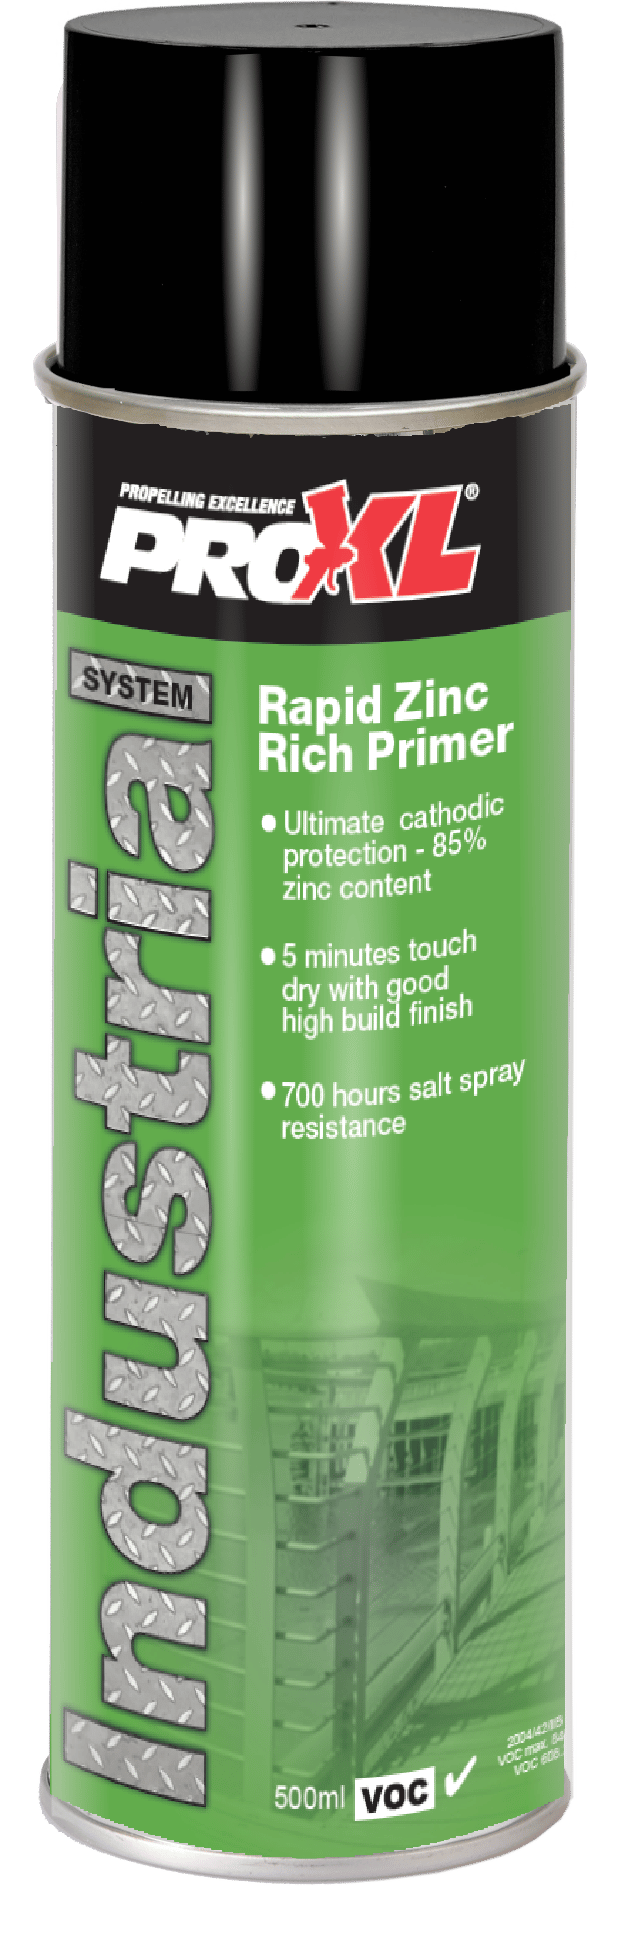 Rapid Zinc Rich Primer Aerosol (500ml) Product Image